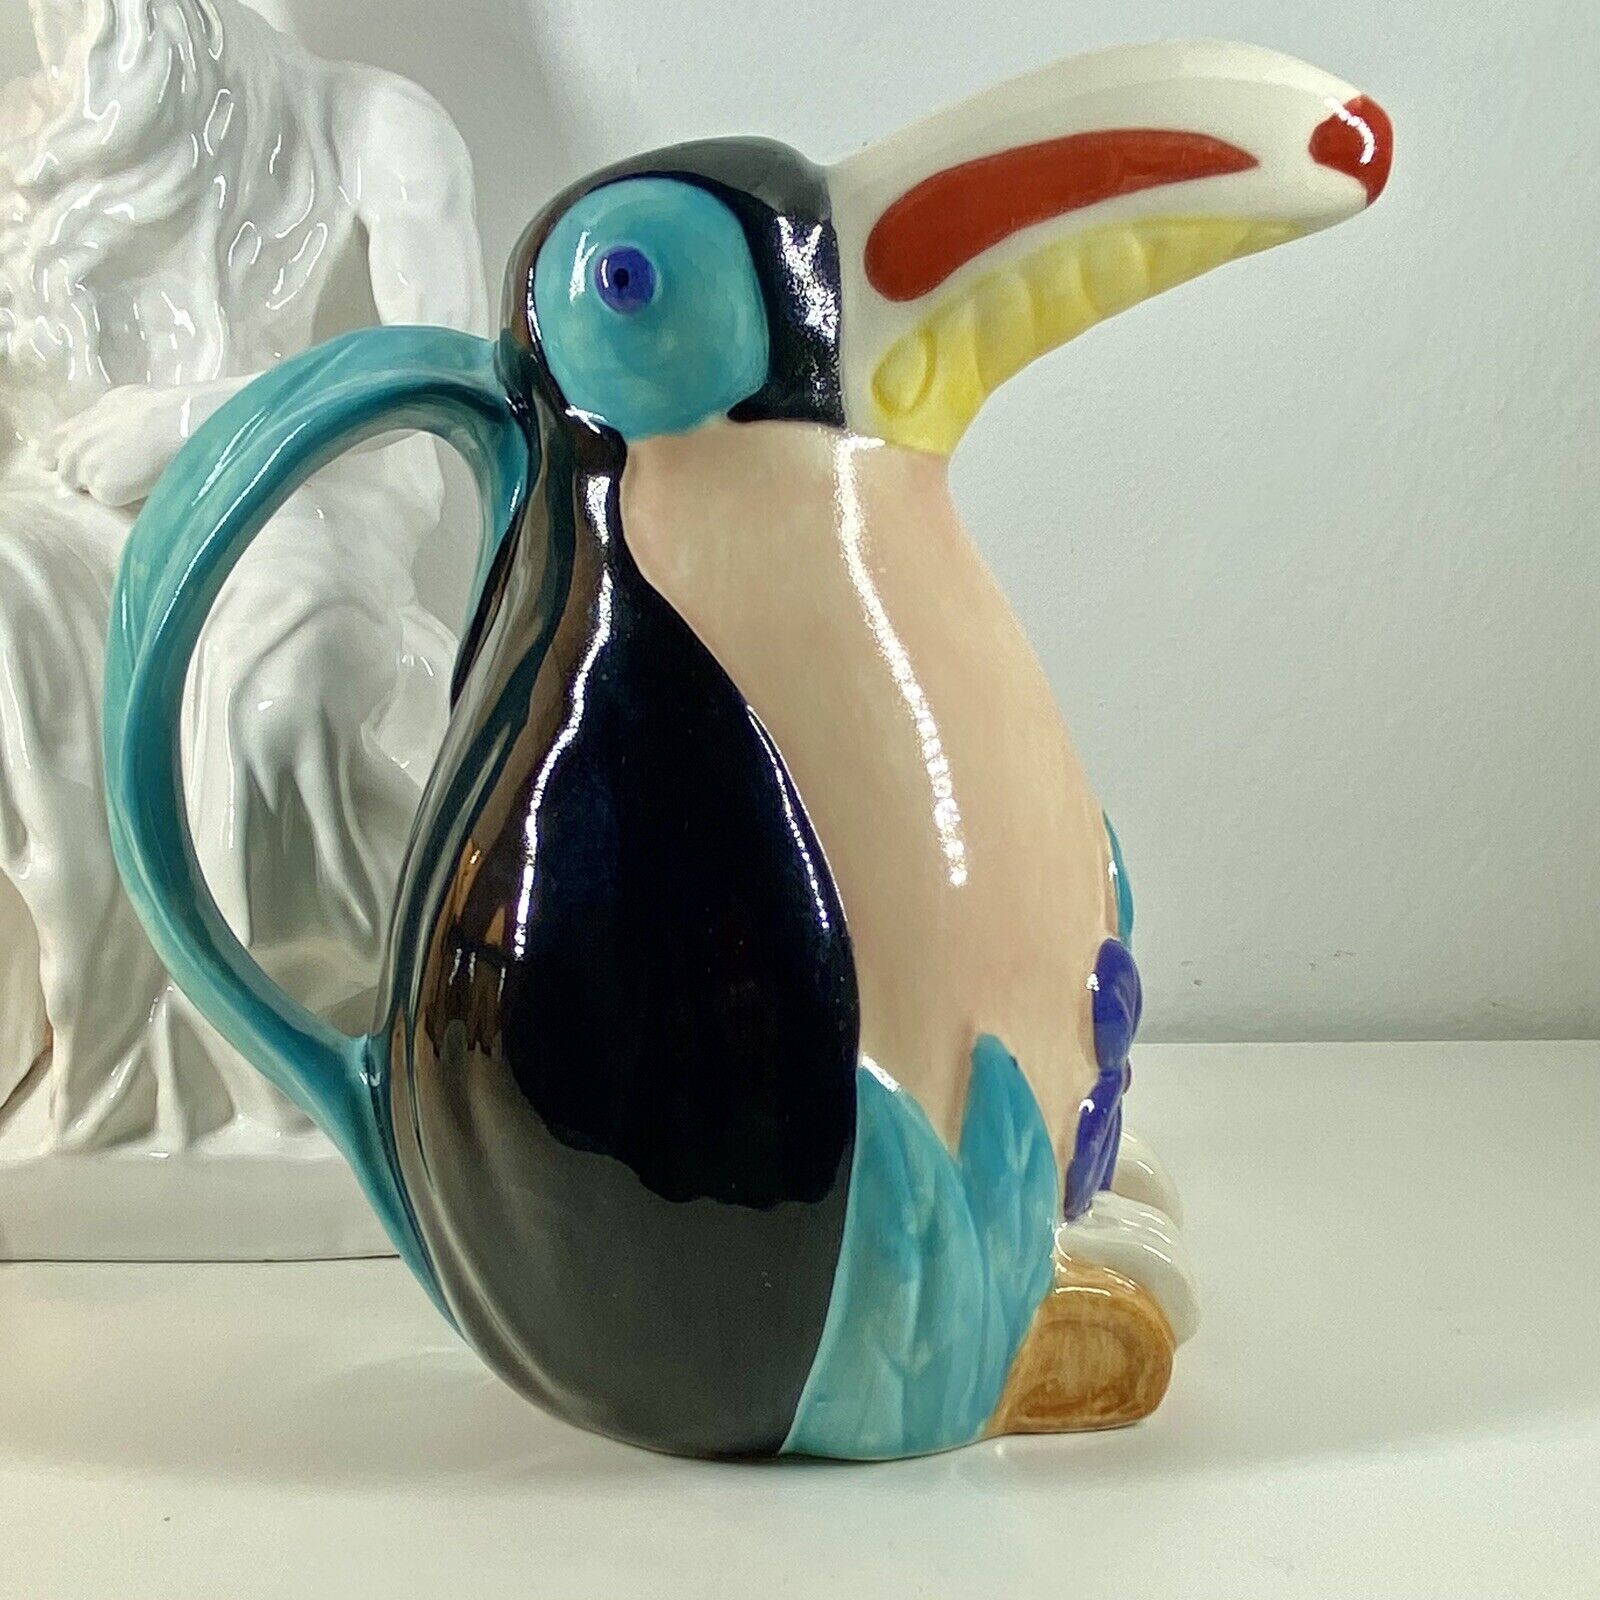 Treasure Craft TOUCAN Water PITCHER VTG 70s Ceramic Kitsch TROPICAL BIRD Pottery